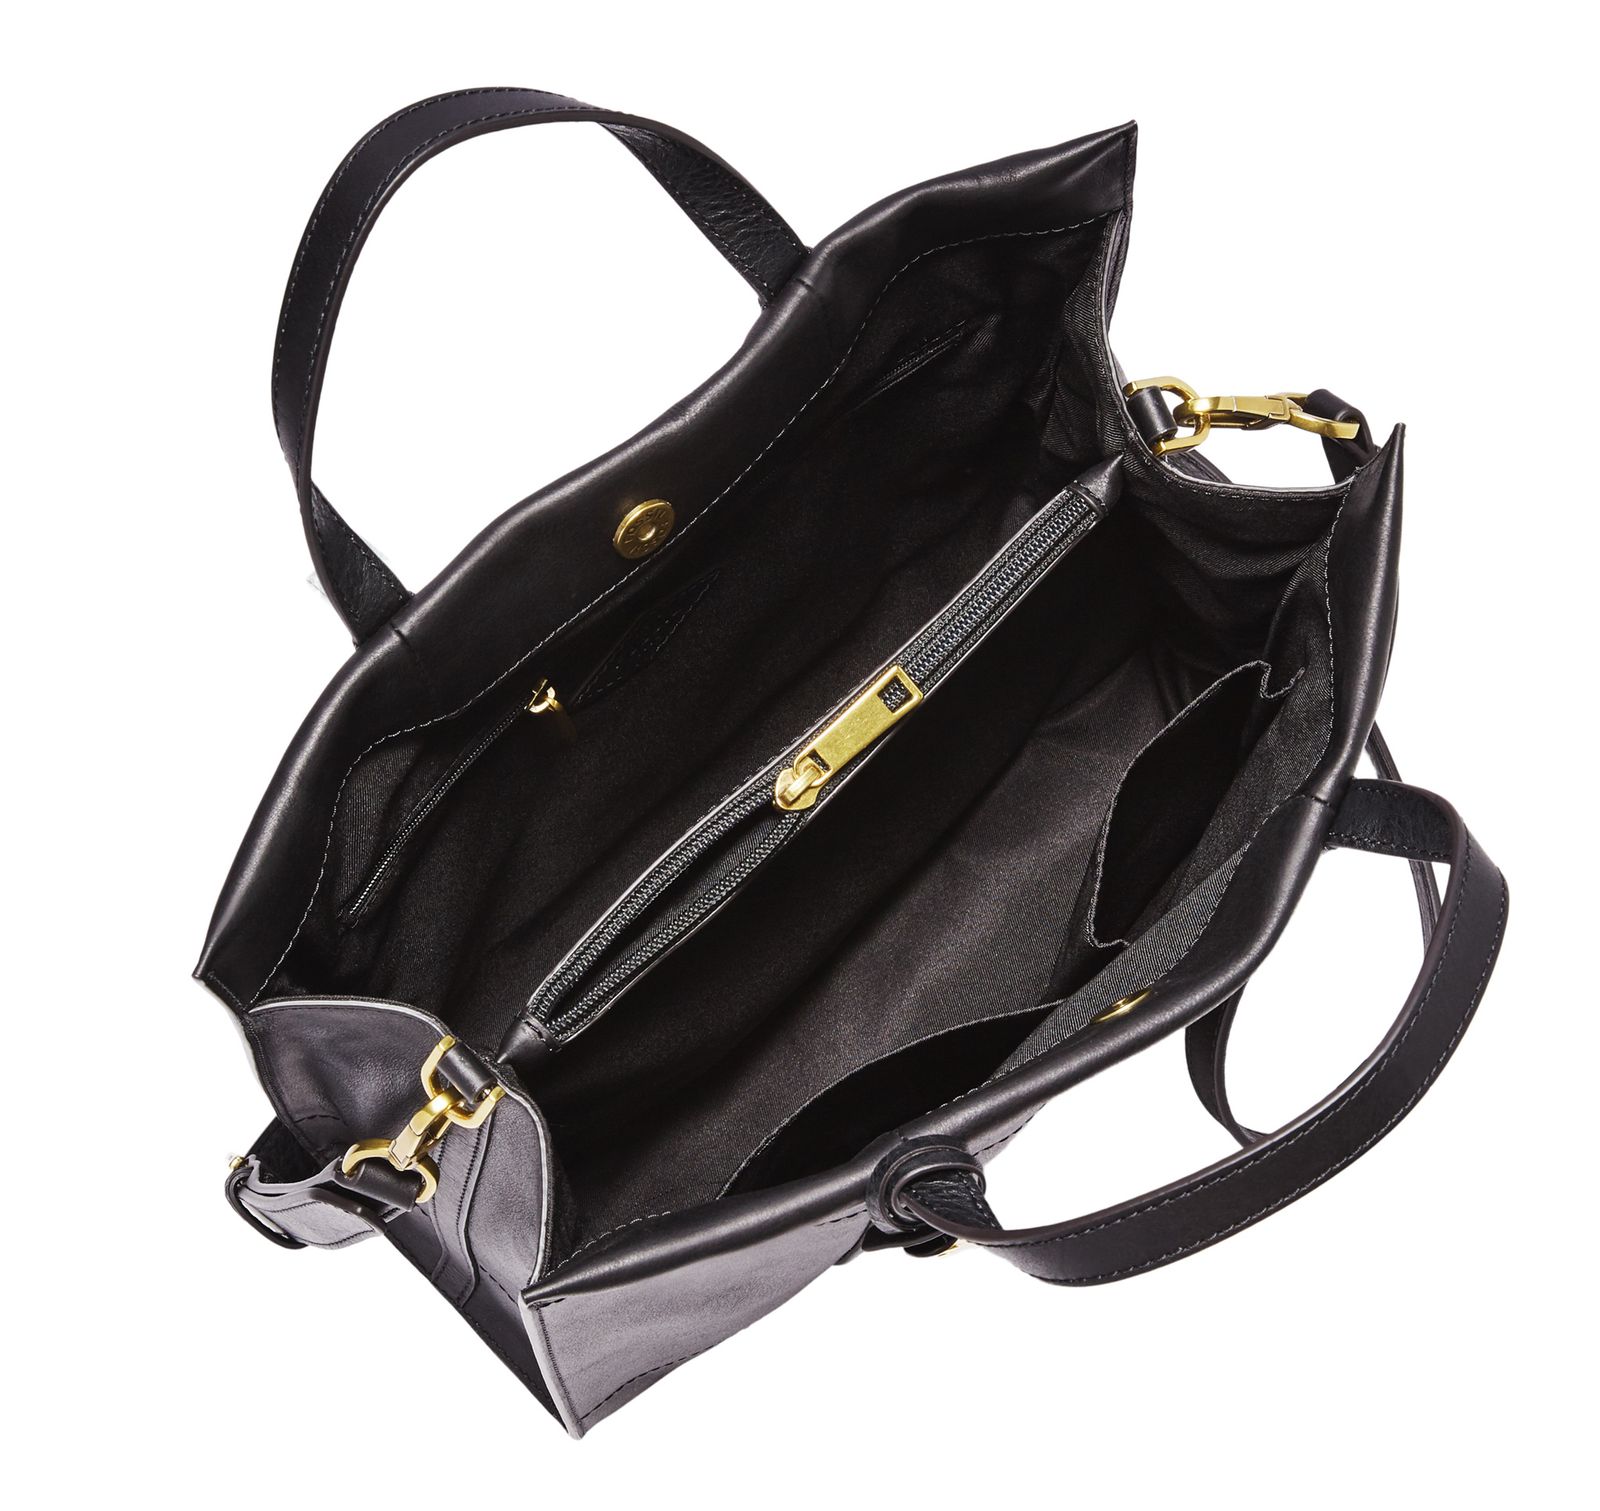 FOSSIL Shopper Carmen Shopper Black | Buy bags, purses & accessories ...